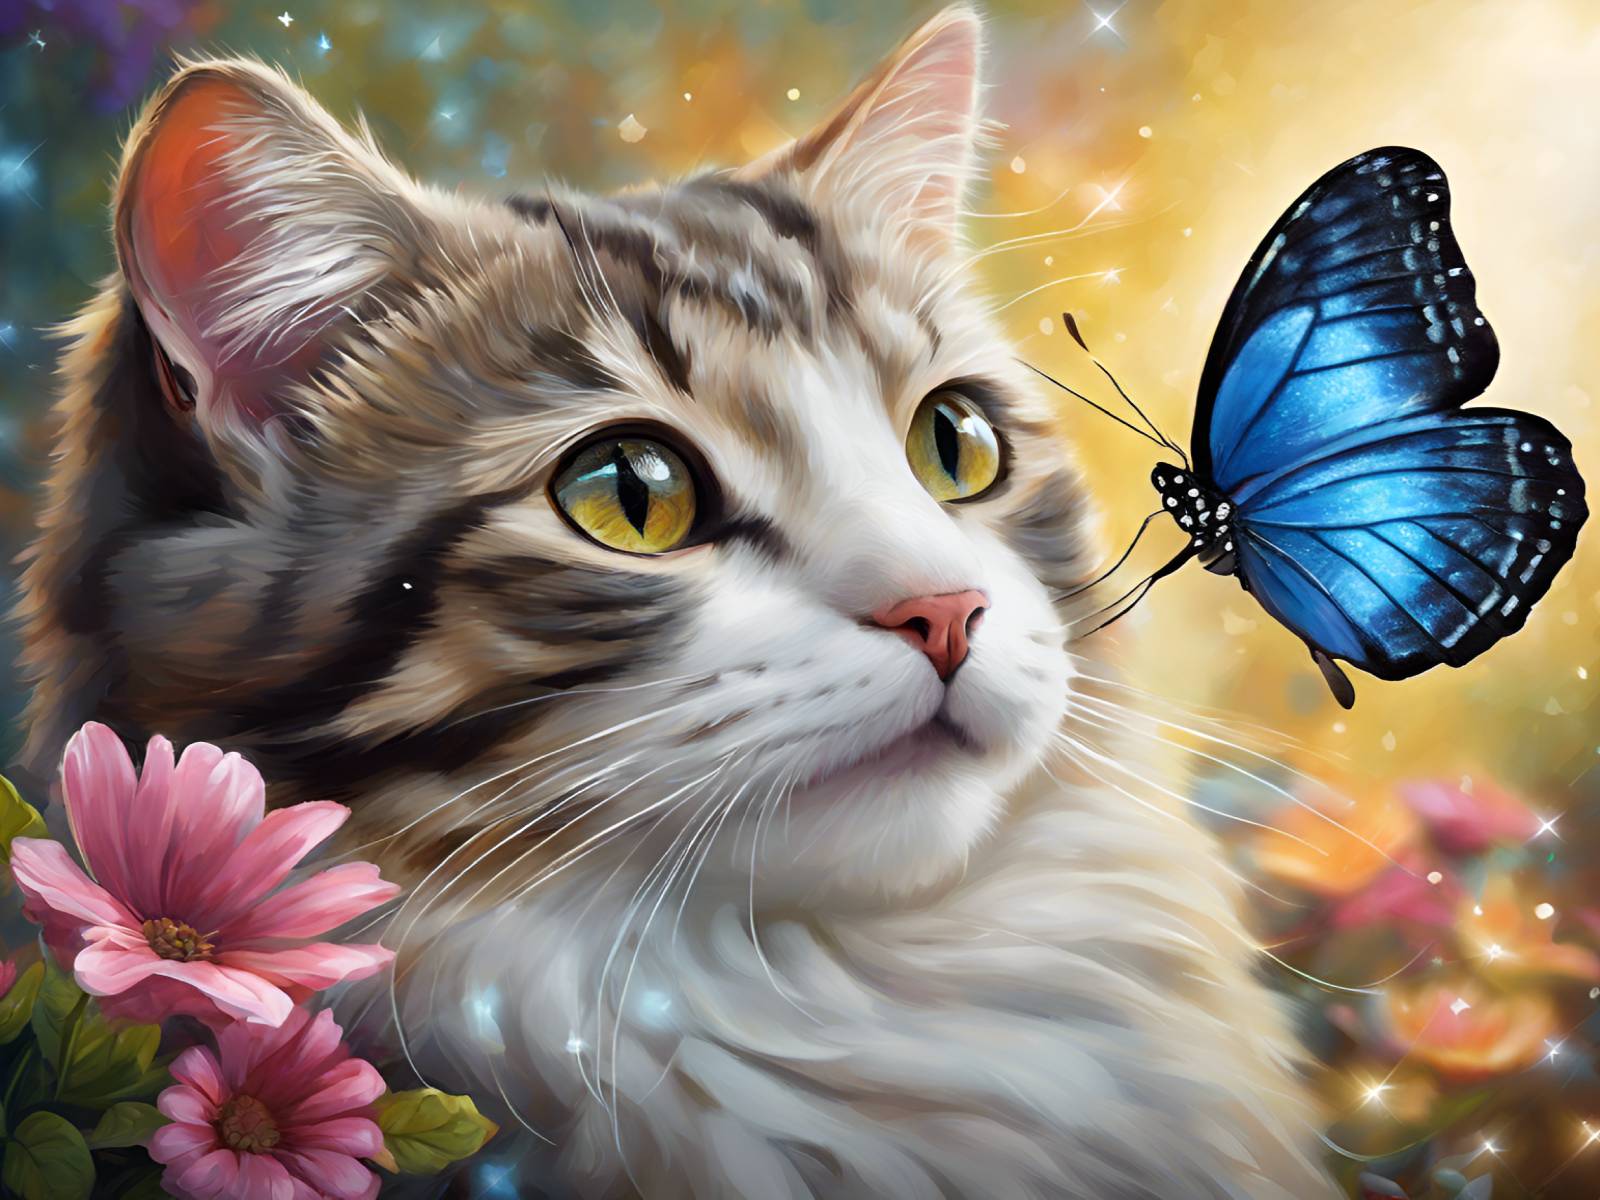 diamonds-wizard-diamond-painting-kit-Animals-Cat-Fluttering-Friendship-original.jpg